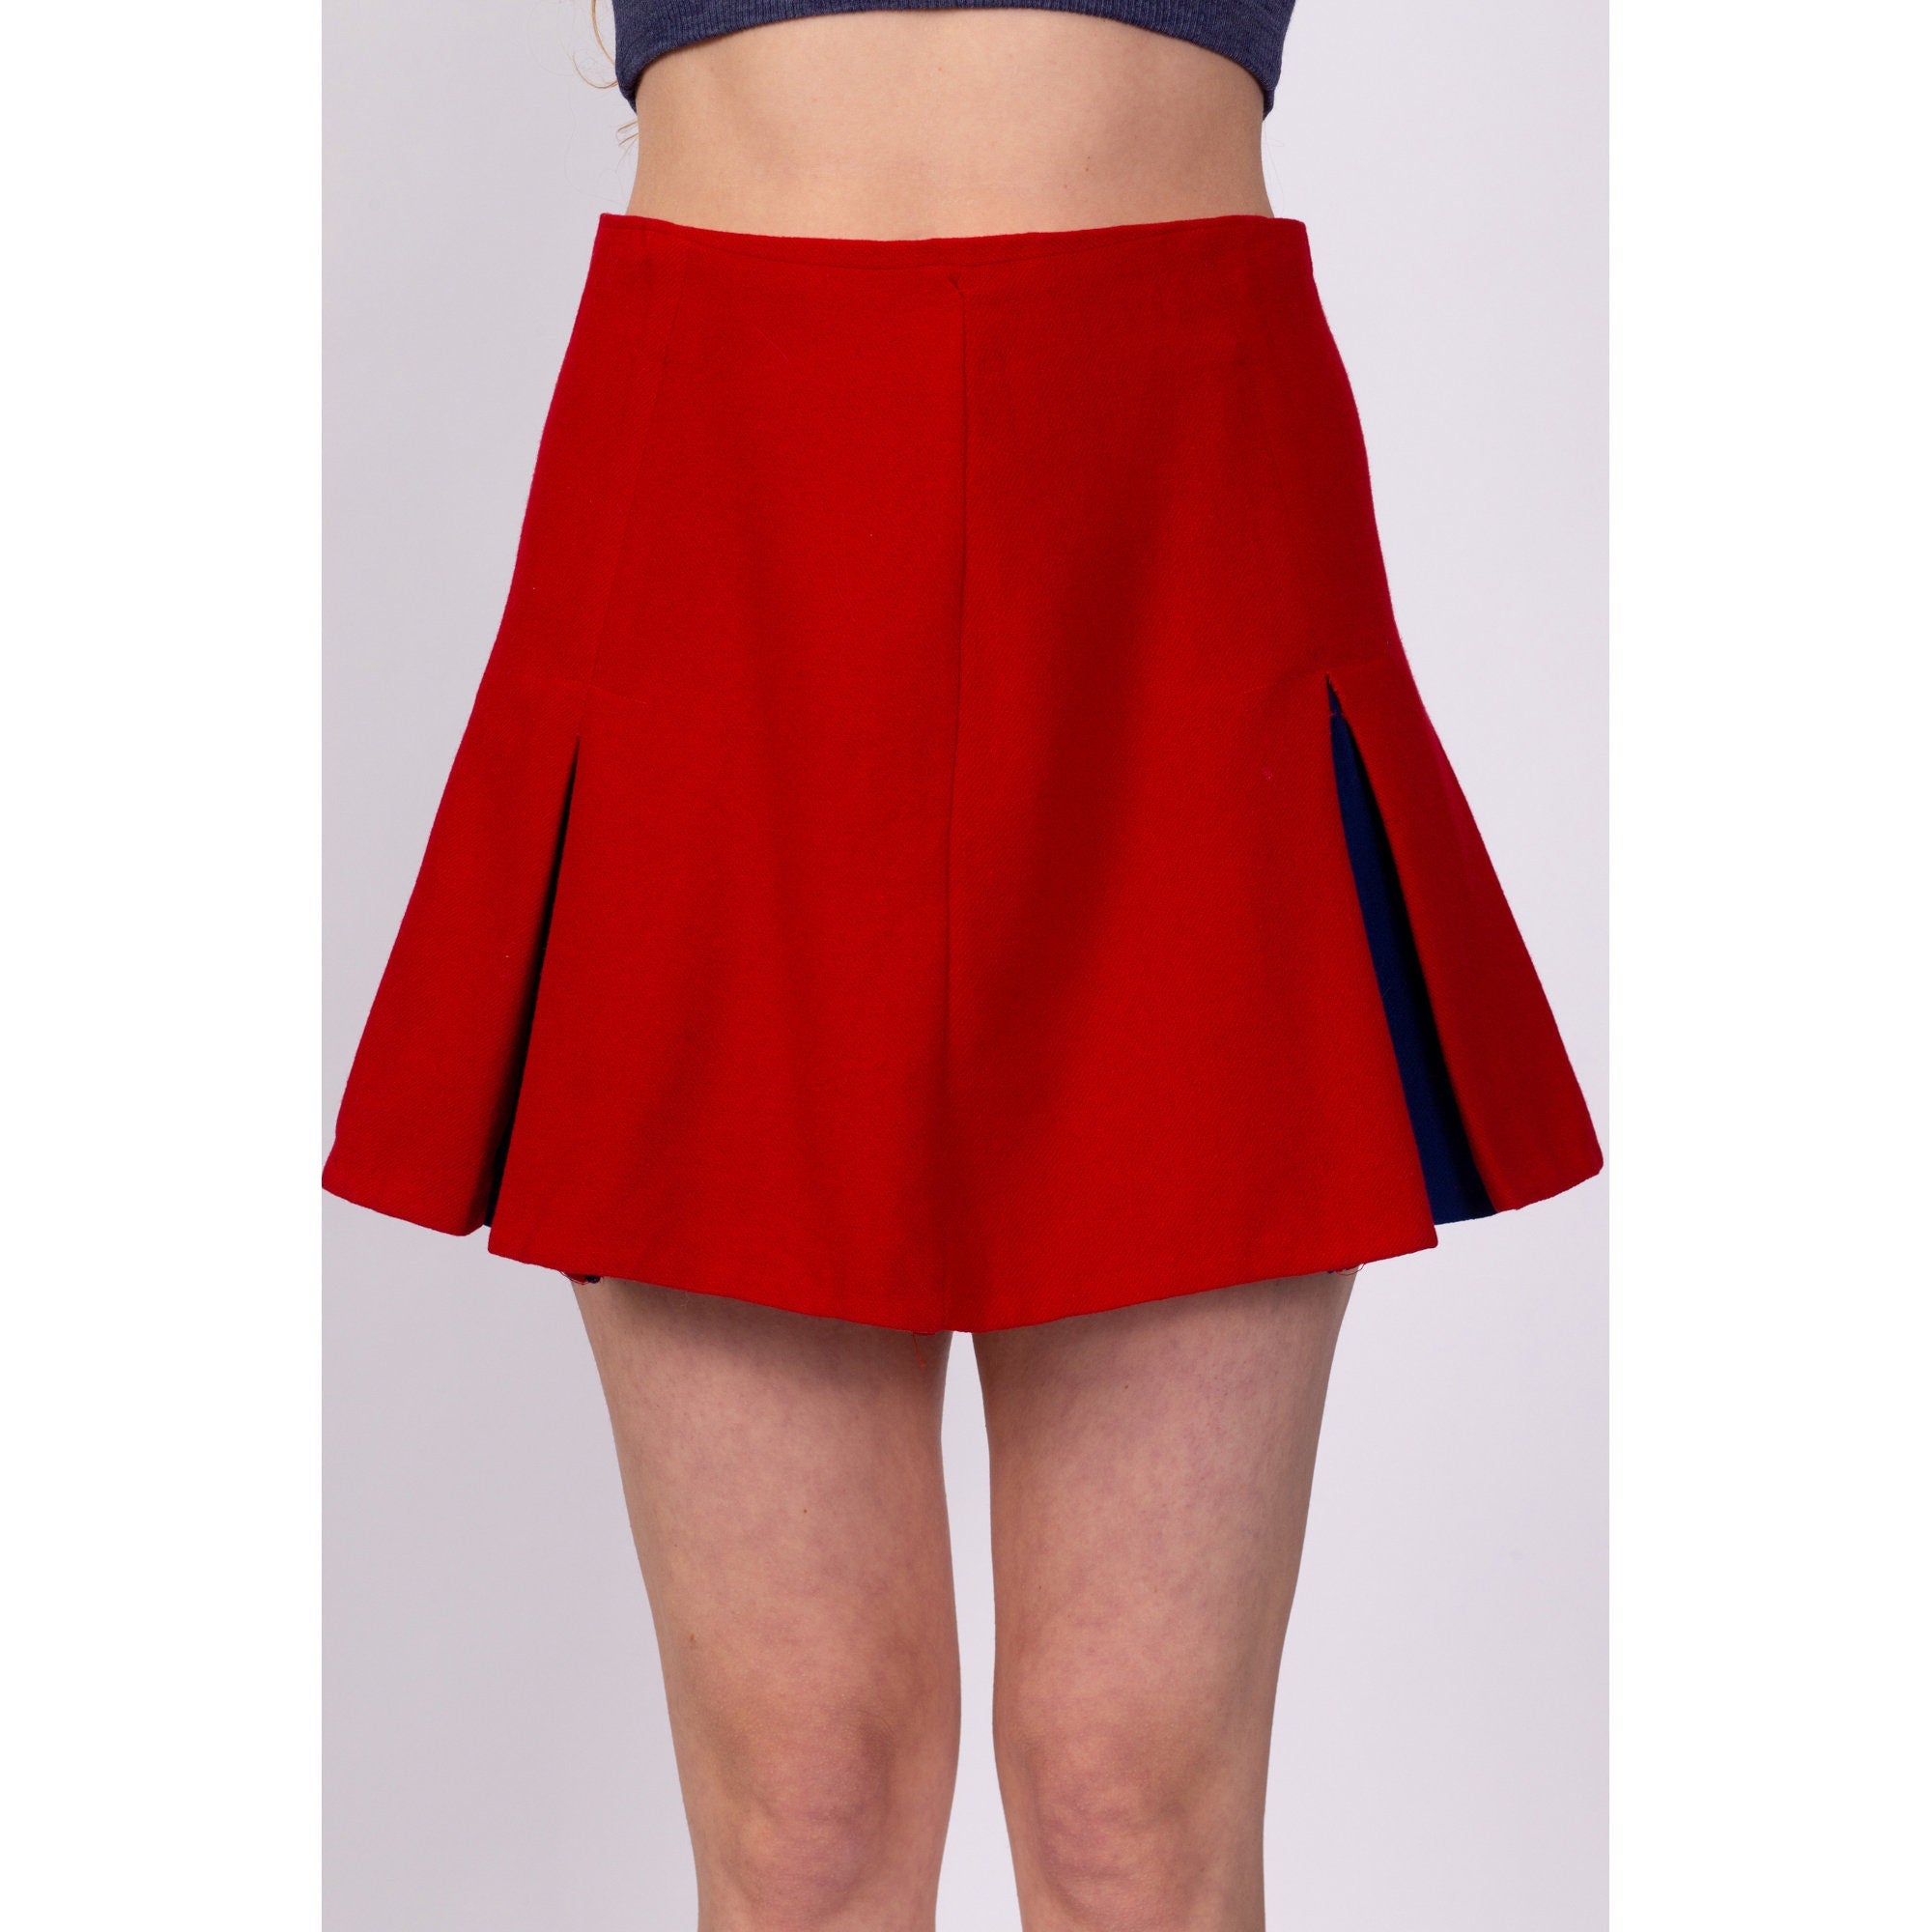 70s Red Cheerleader Mini Skirt - Medium, 28